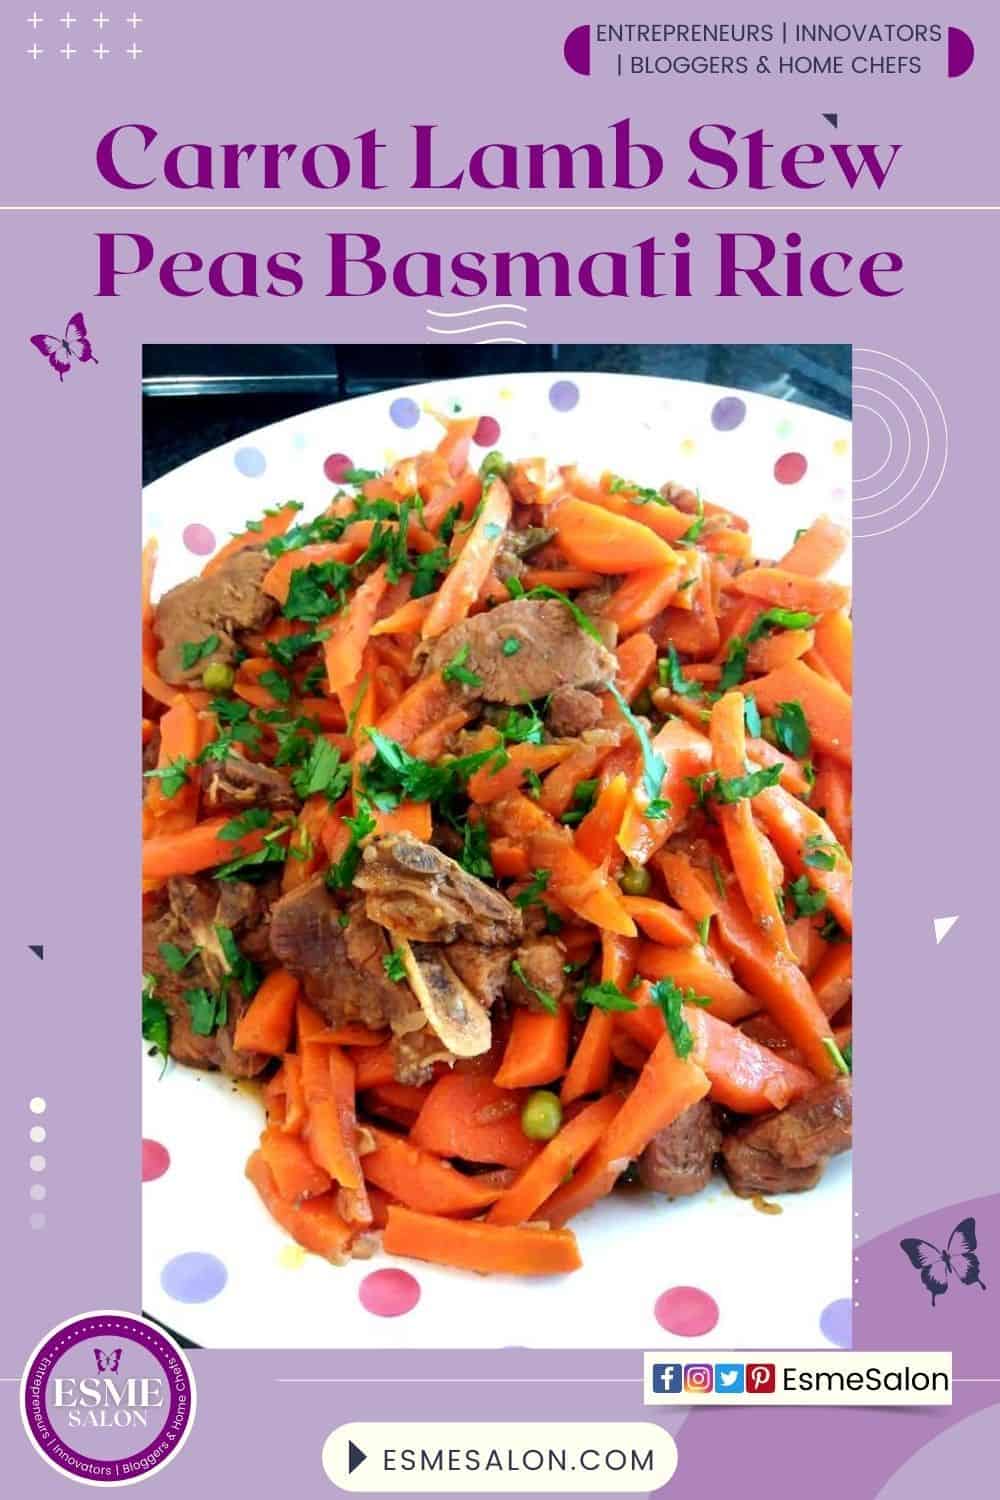 Carrot Lamb Stew with Peas on Basmati Rice